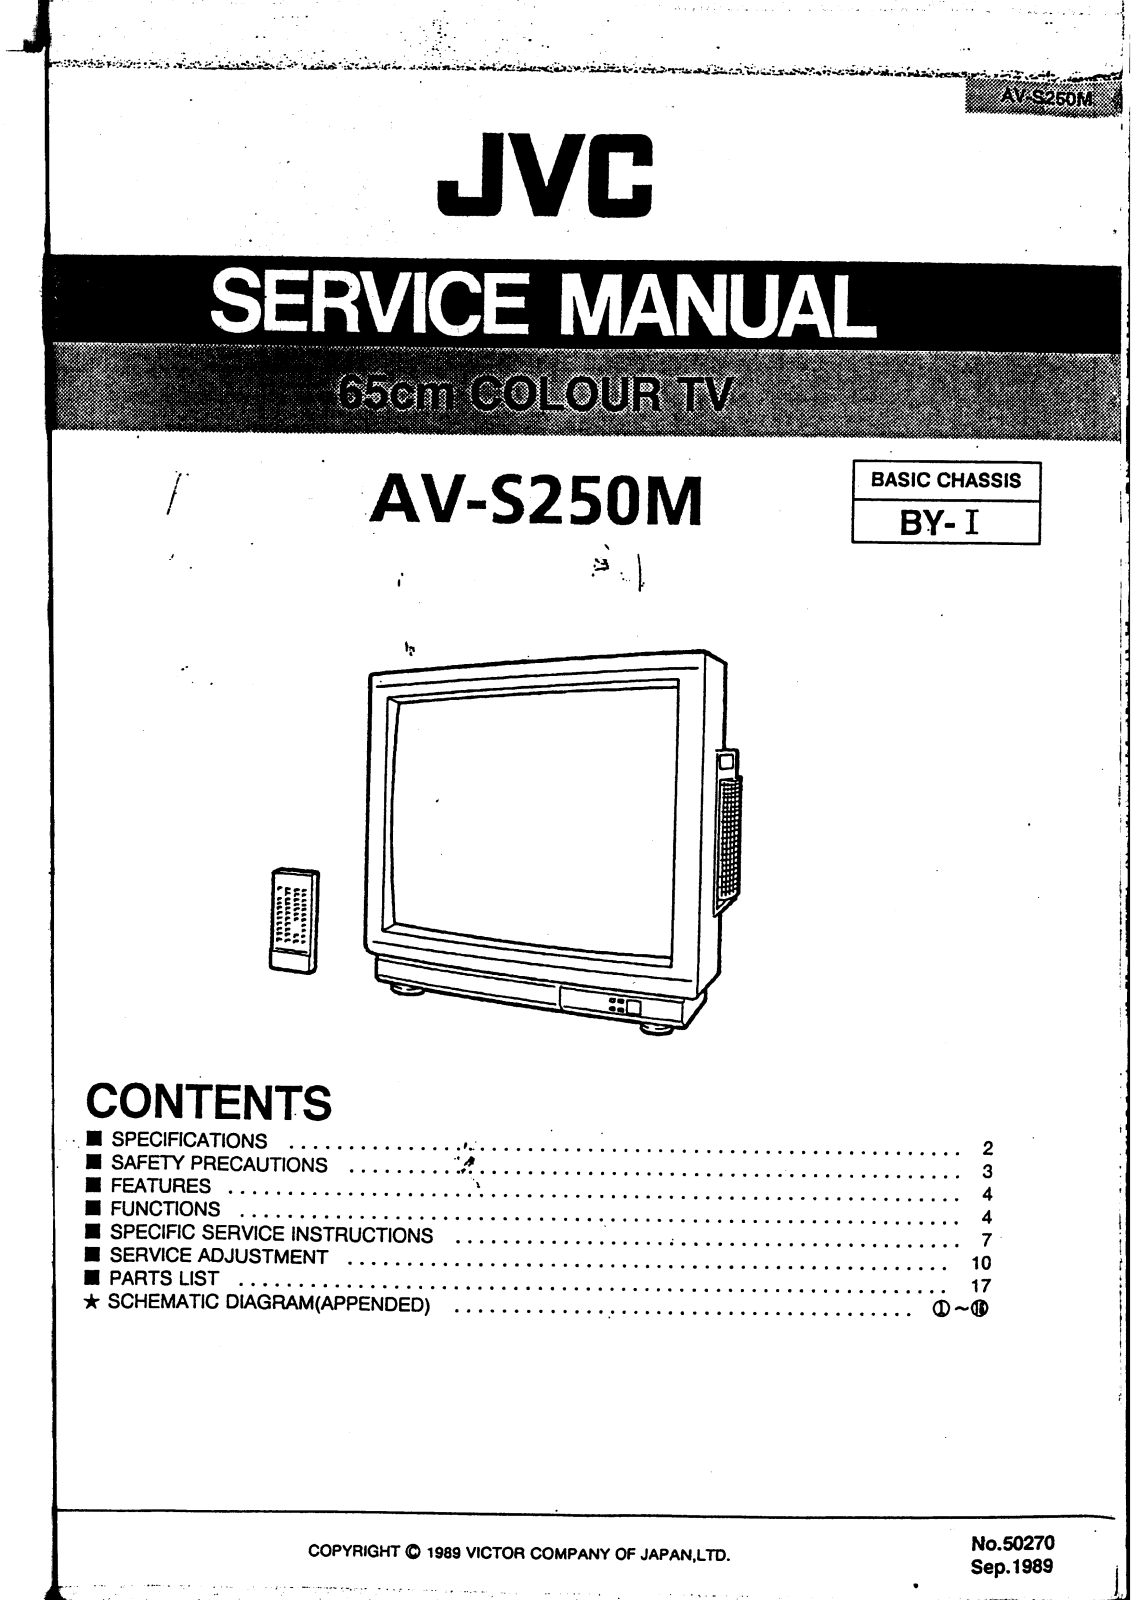 JVC AV-S250M Service Manual